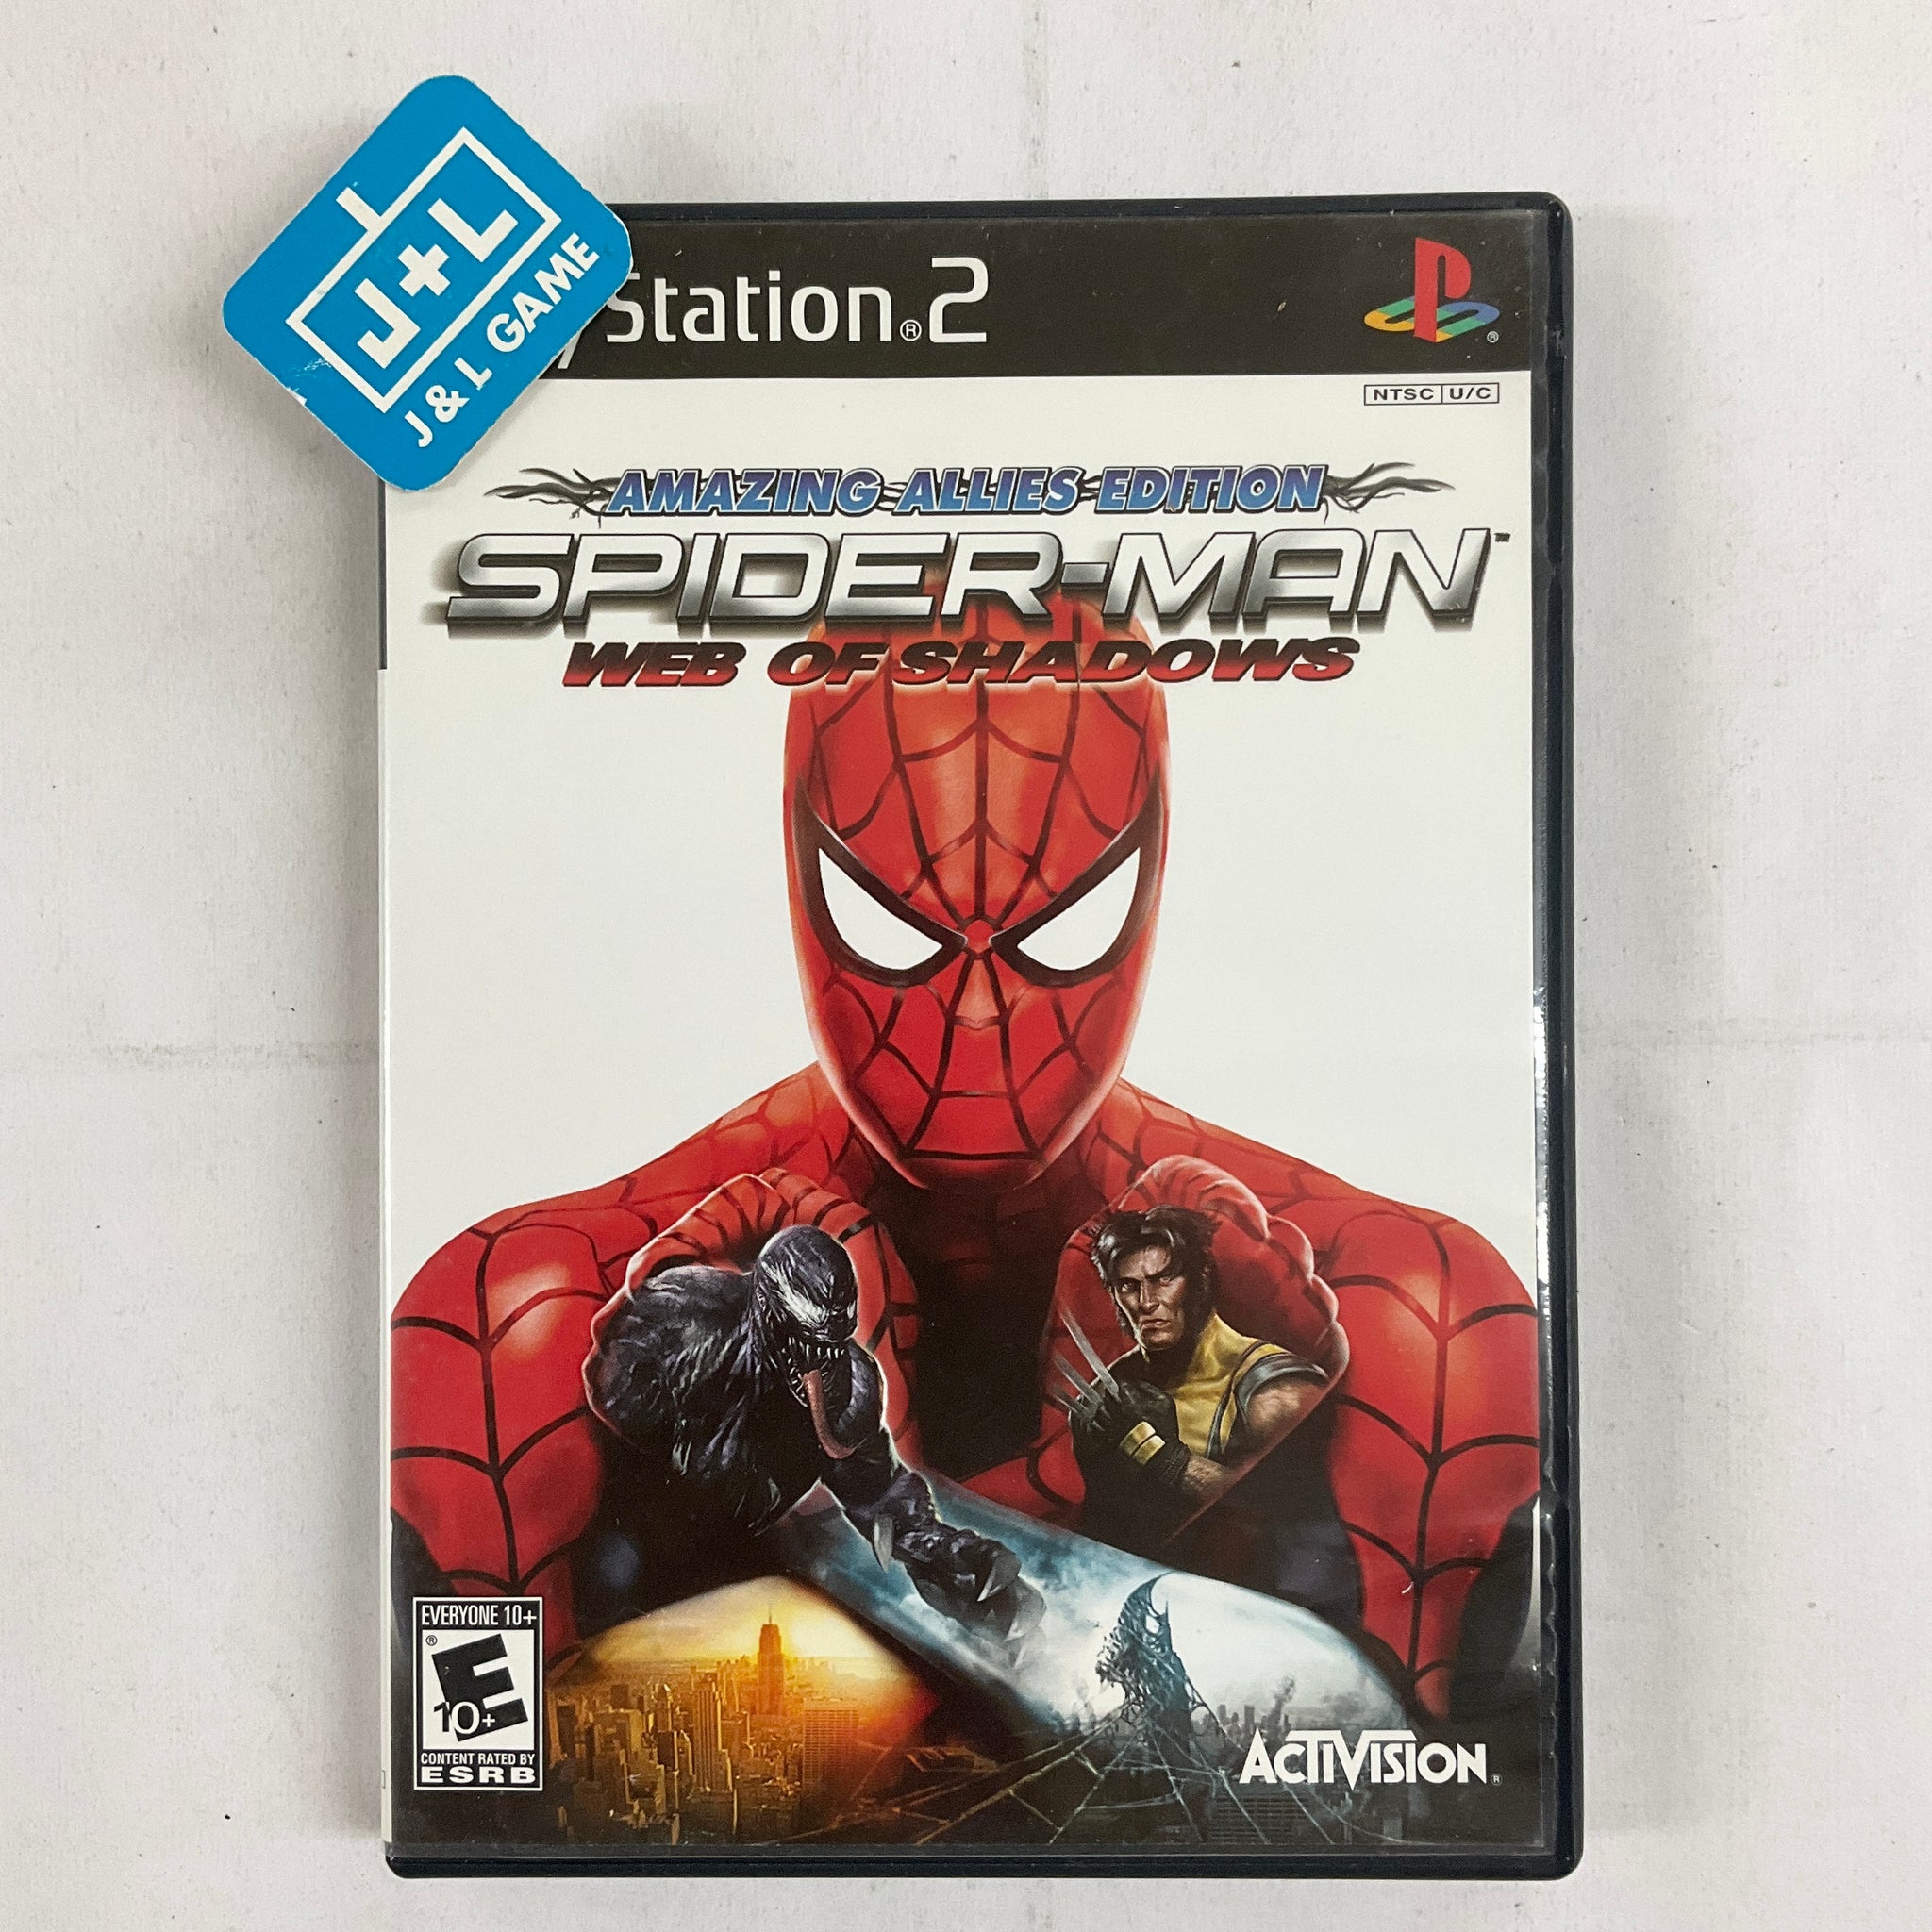 Spider-Man: Web of Shadows -- Amazing Allies Edition - IGN